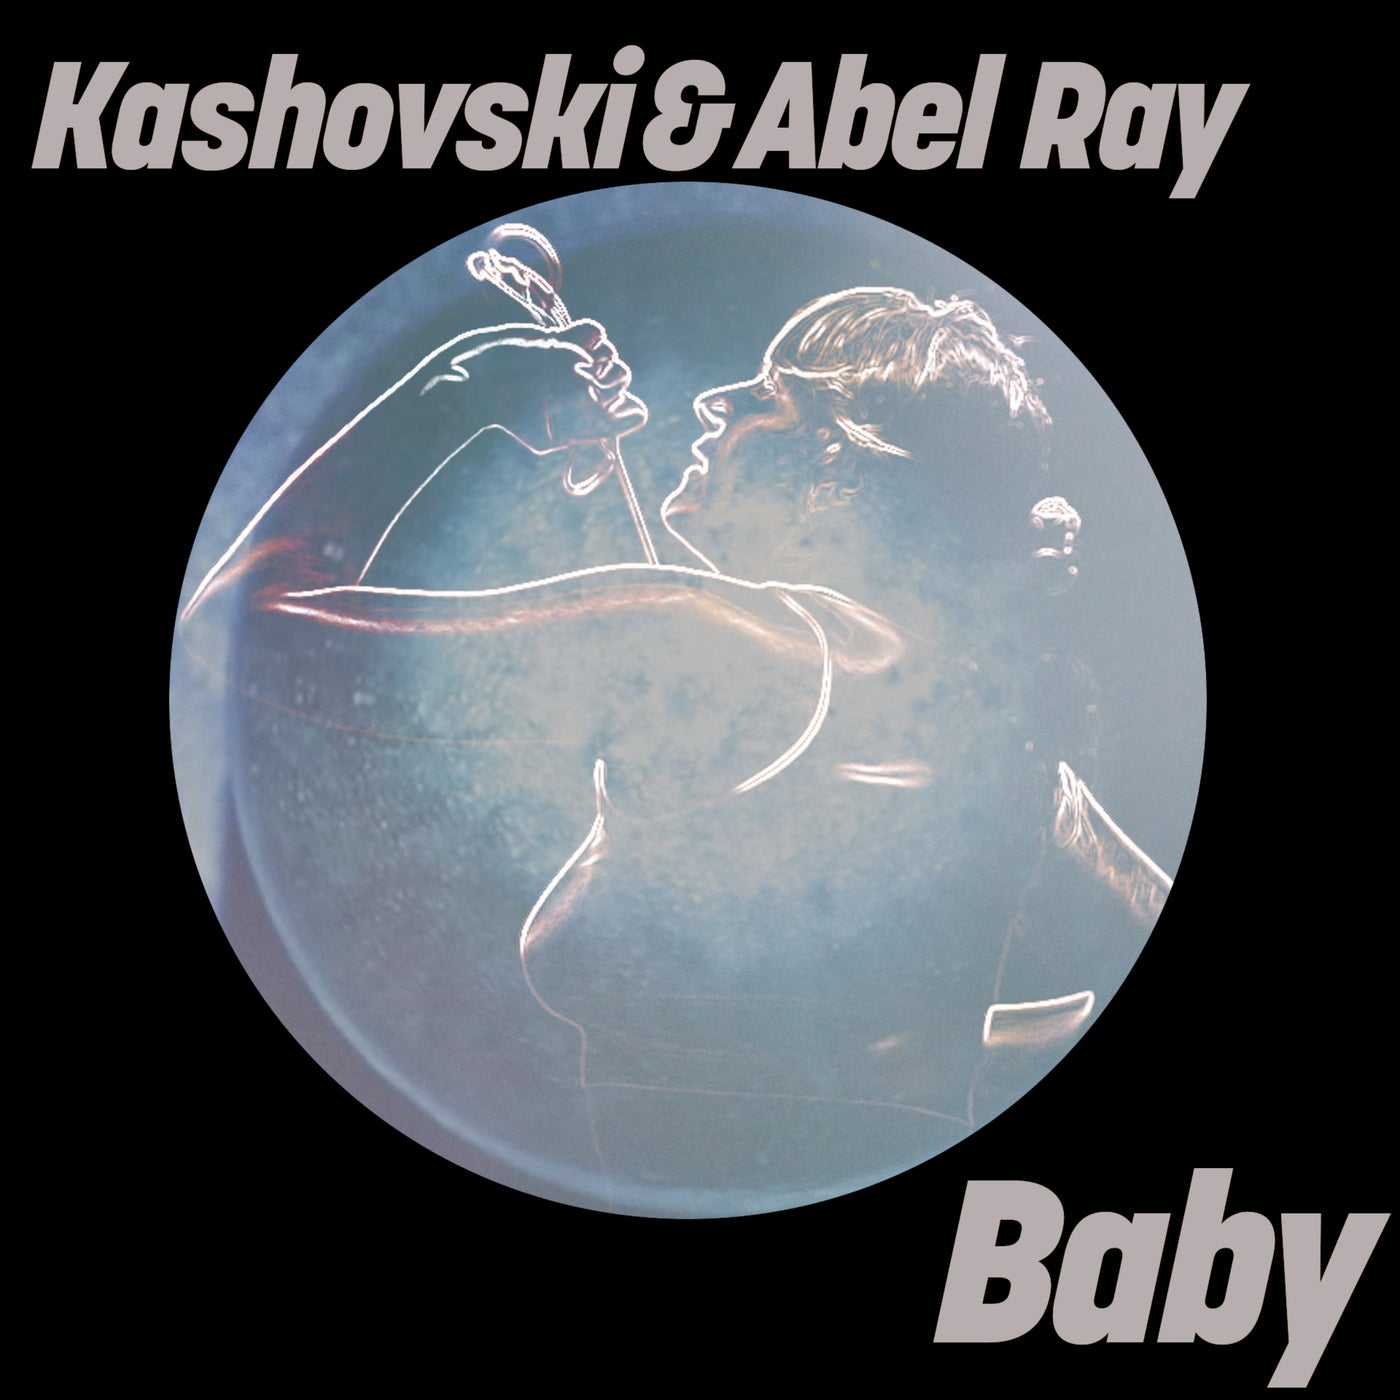 image cover: Abel Ray, Kashovski - Baby on Get Physical Music